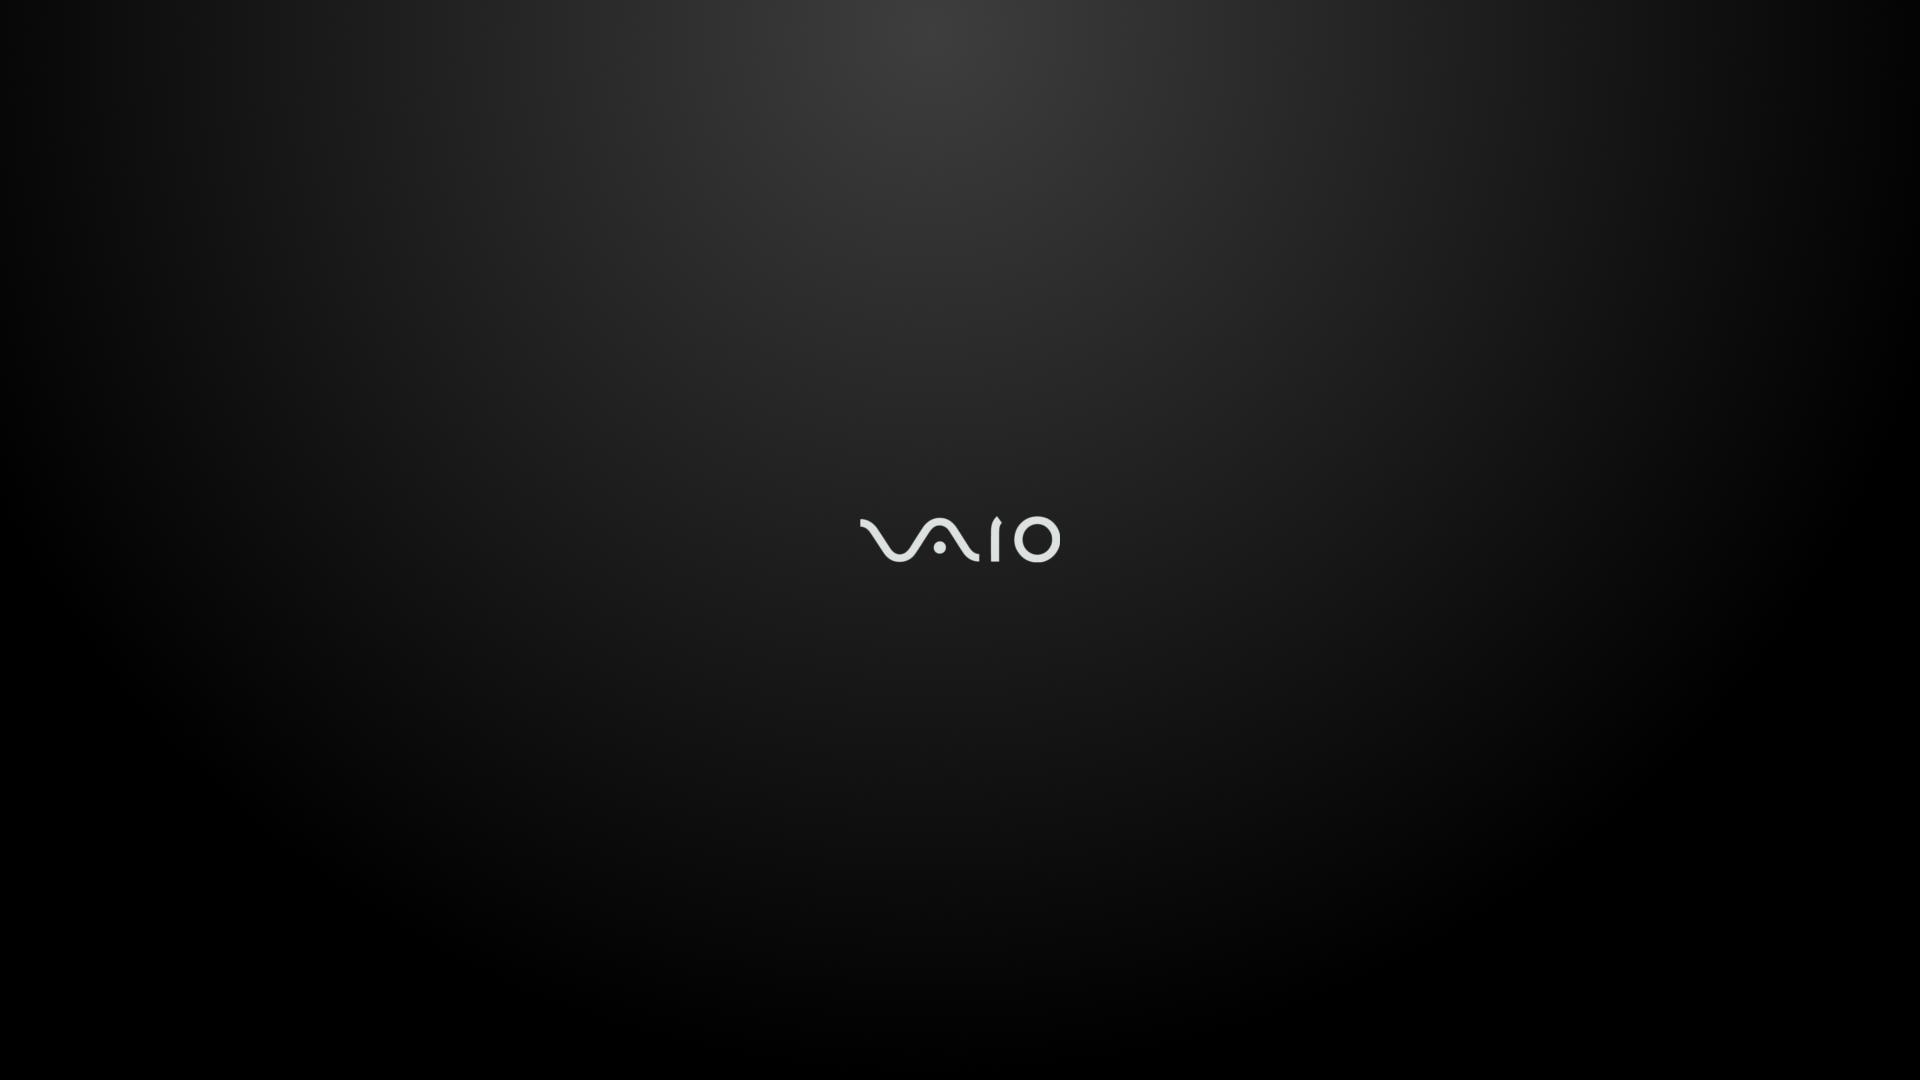 Black Sony Vaio Wallpaper HD Jpg